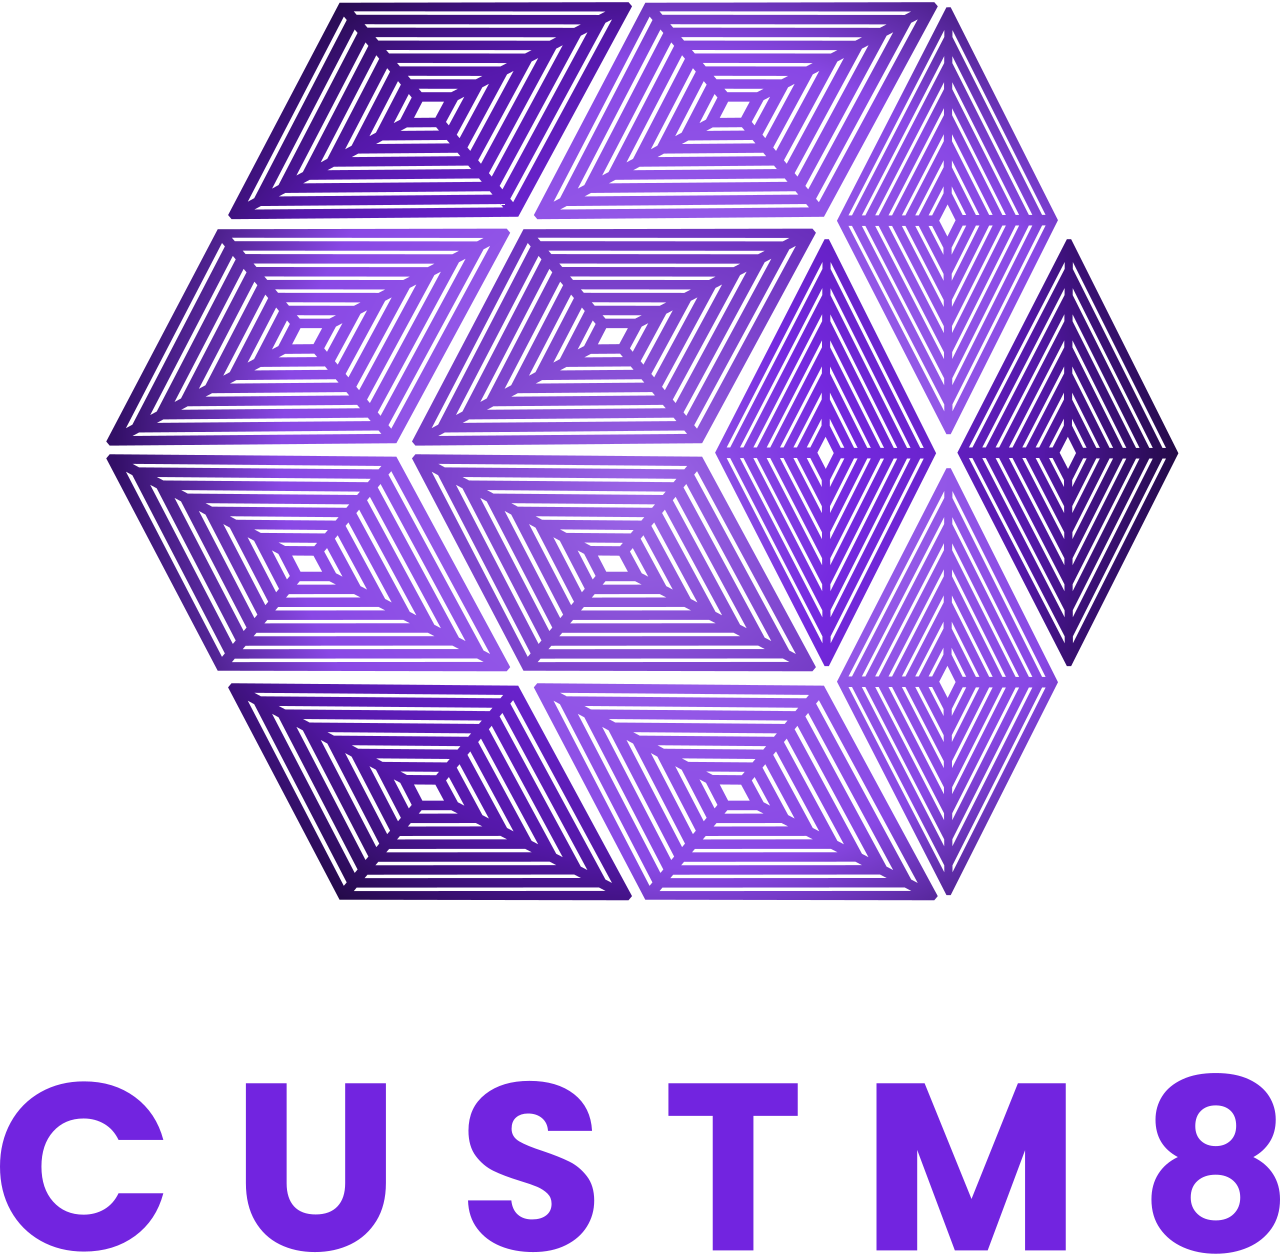 CustM8's logo